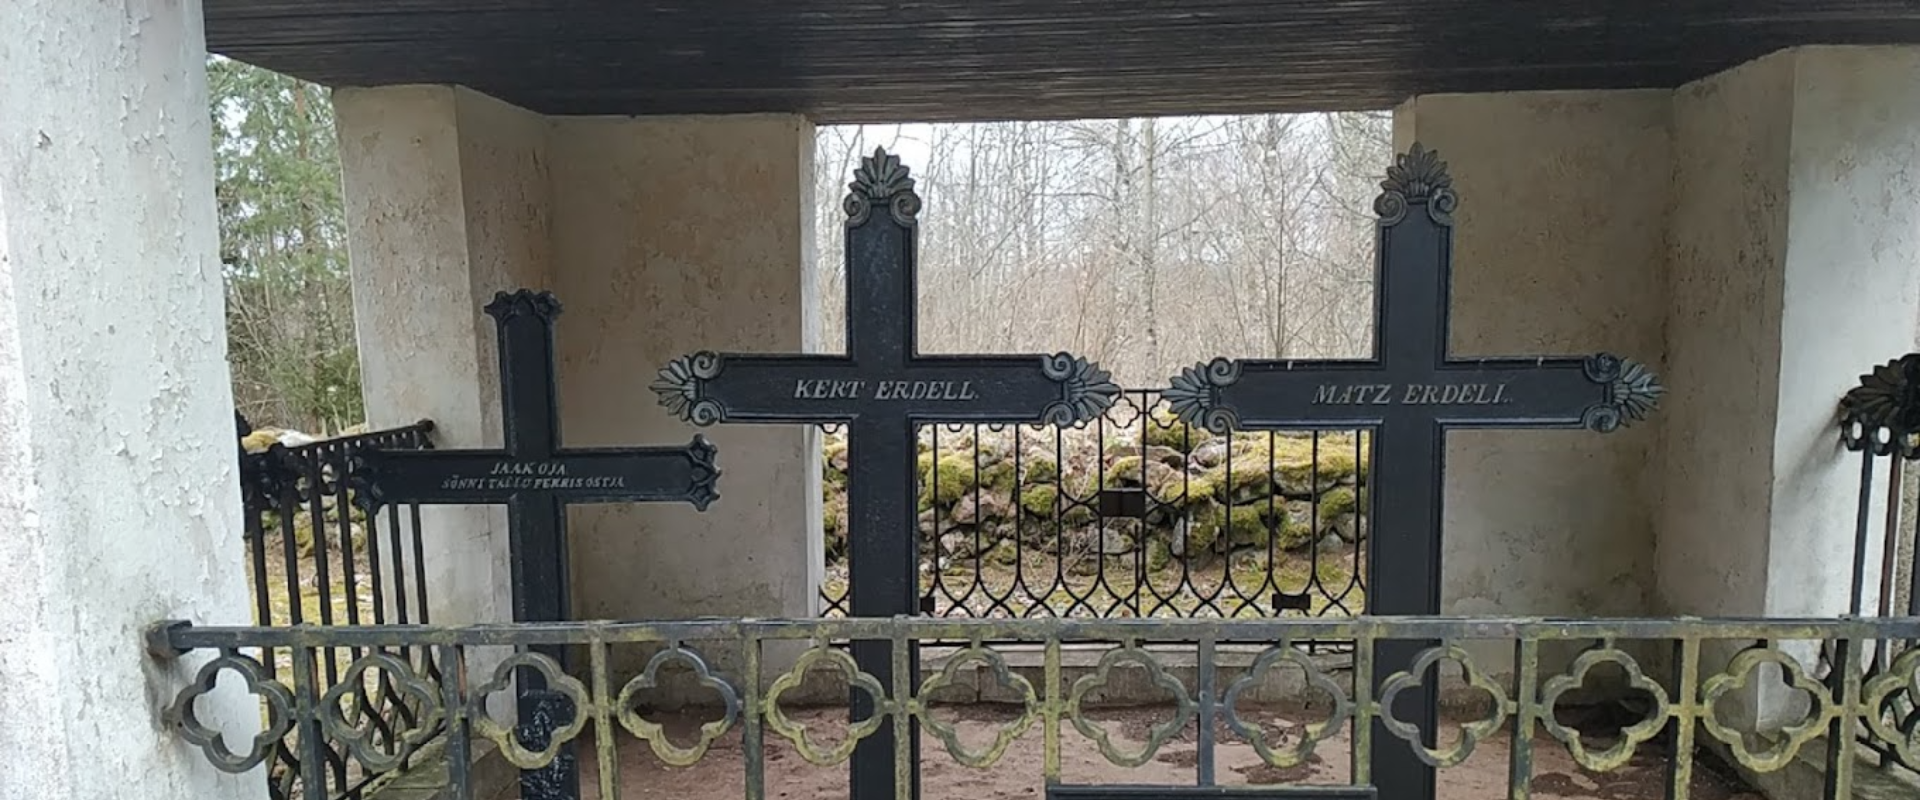 Mats Erdelli kabel Ala kalmistul